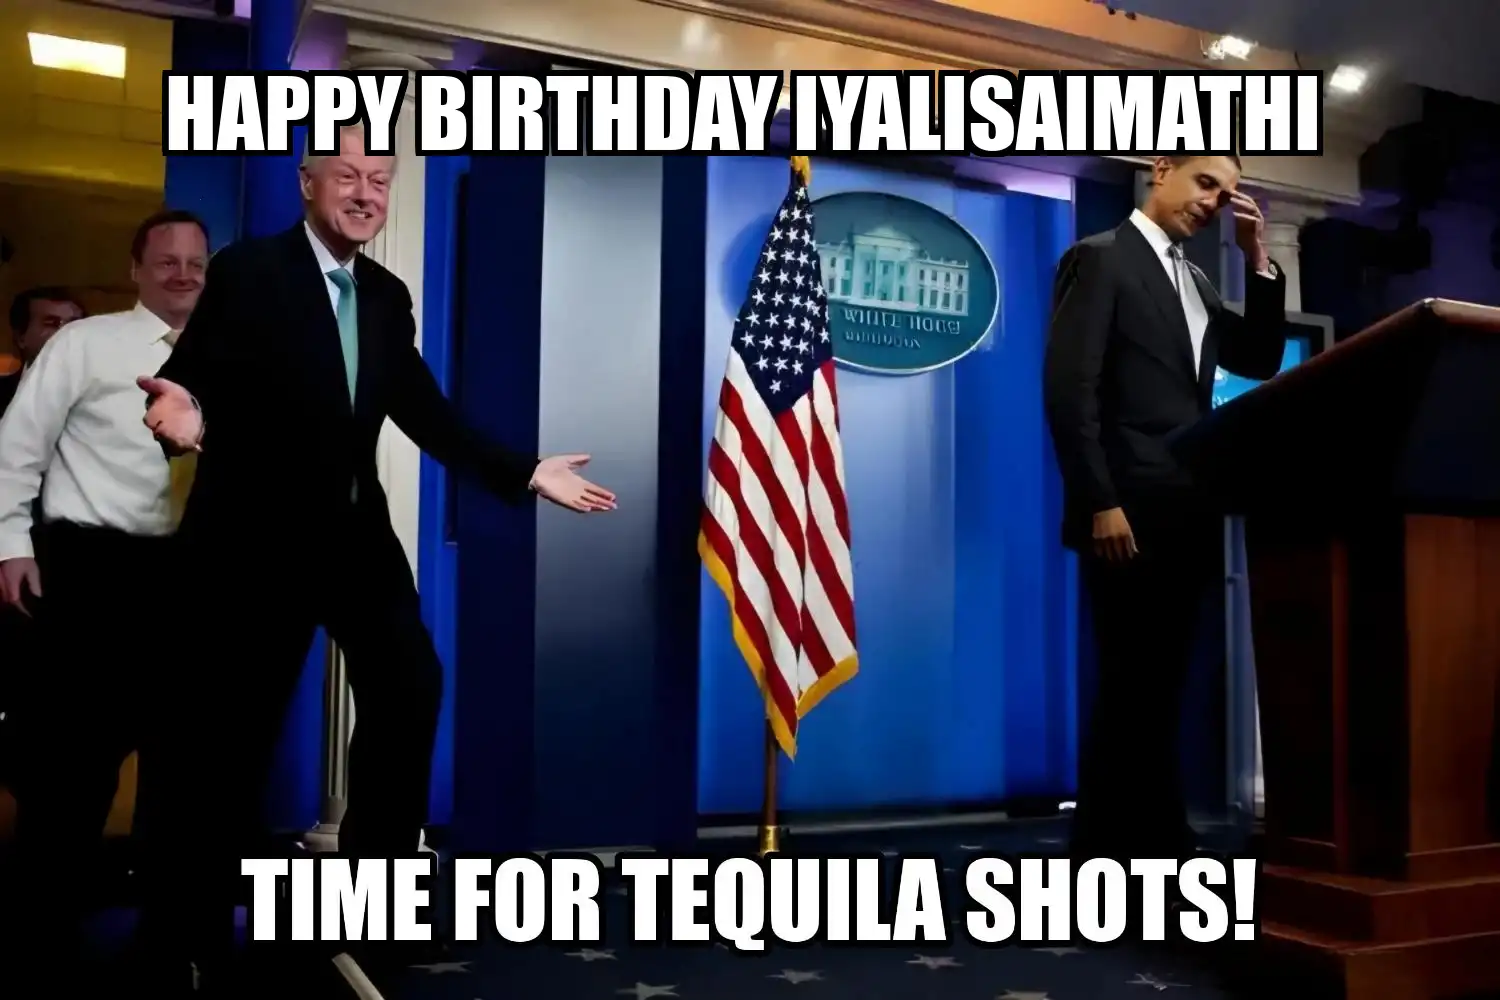 Happy Birthday Iyalisaimathi Time For Tequila Shots Memes